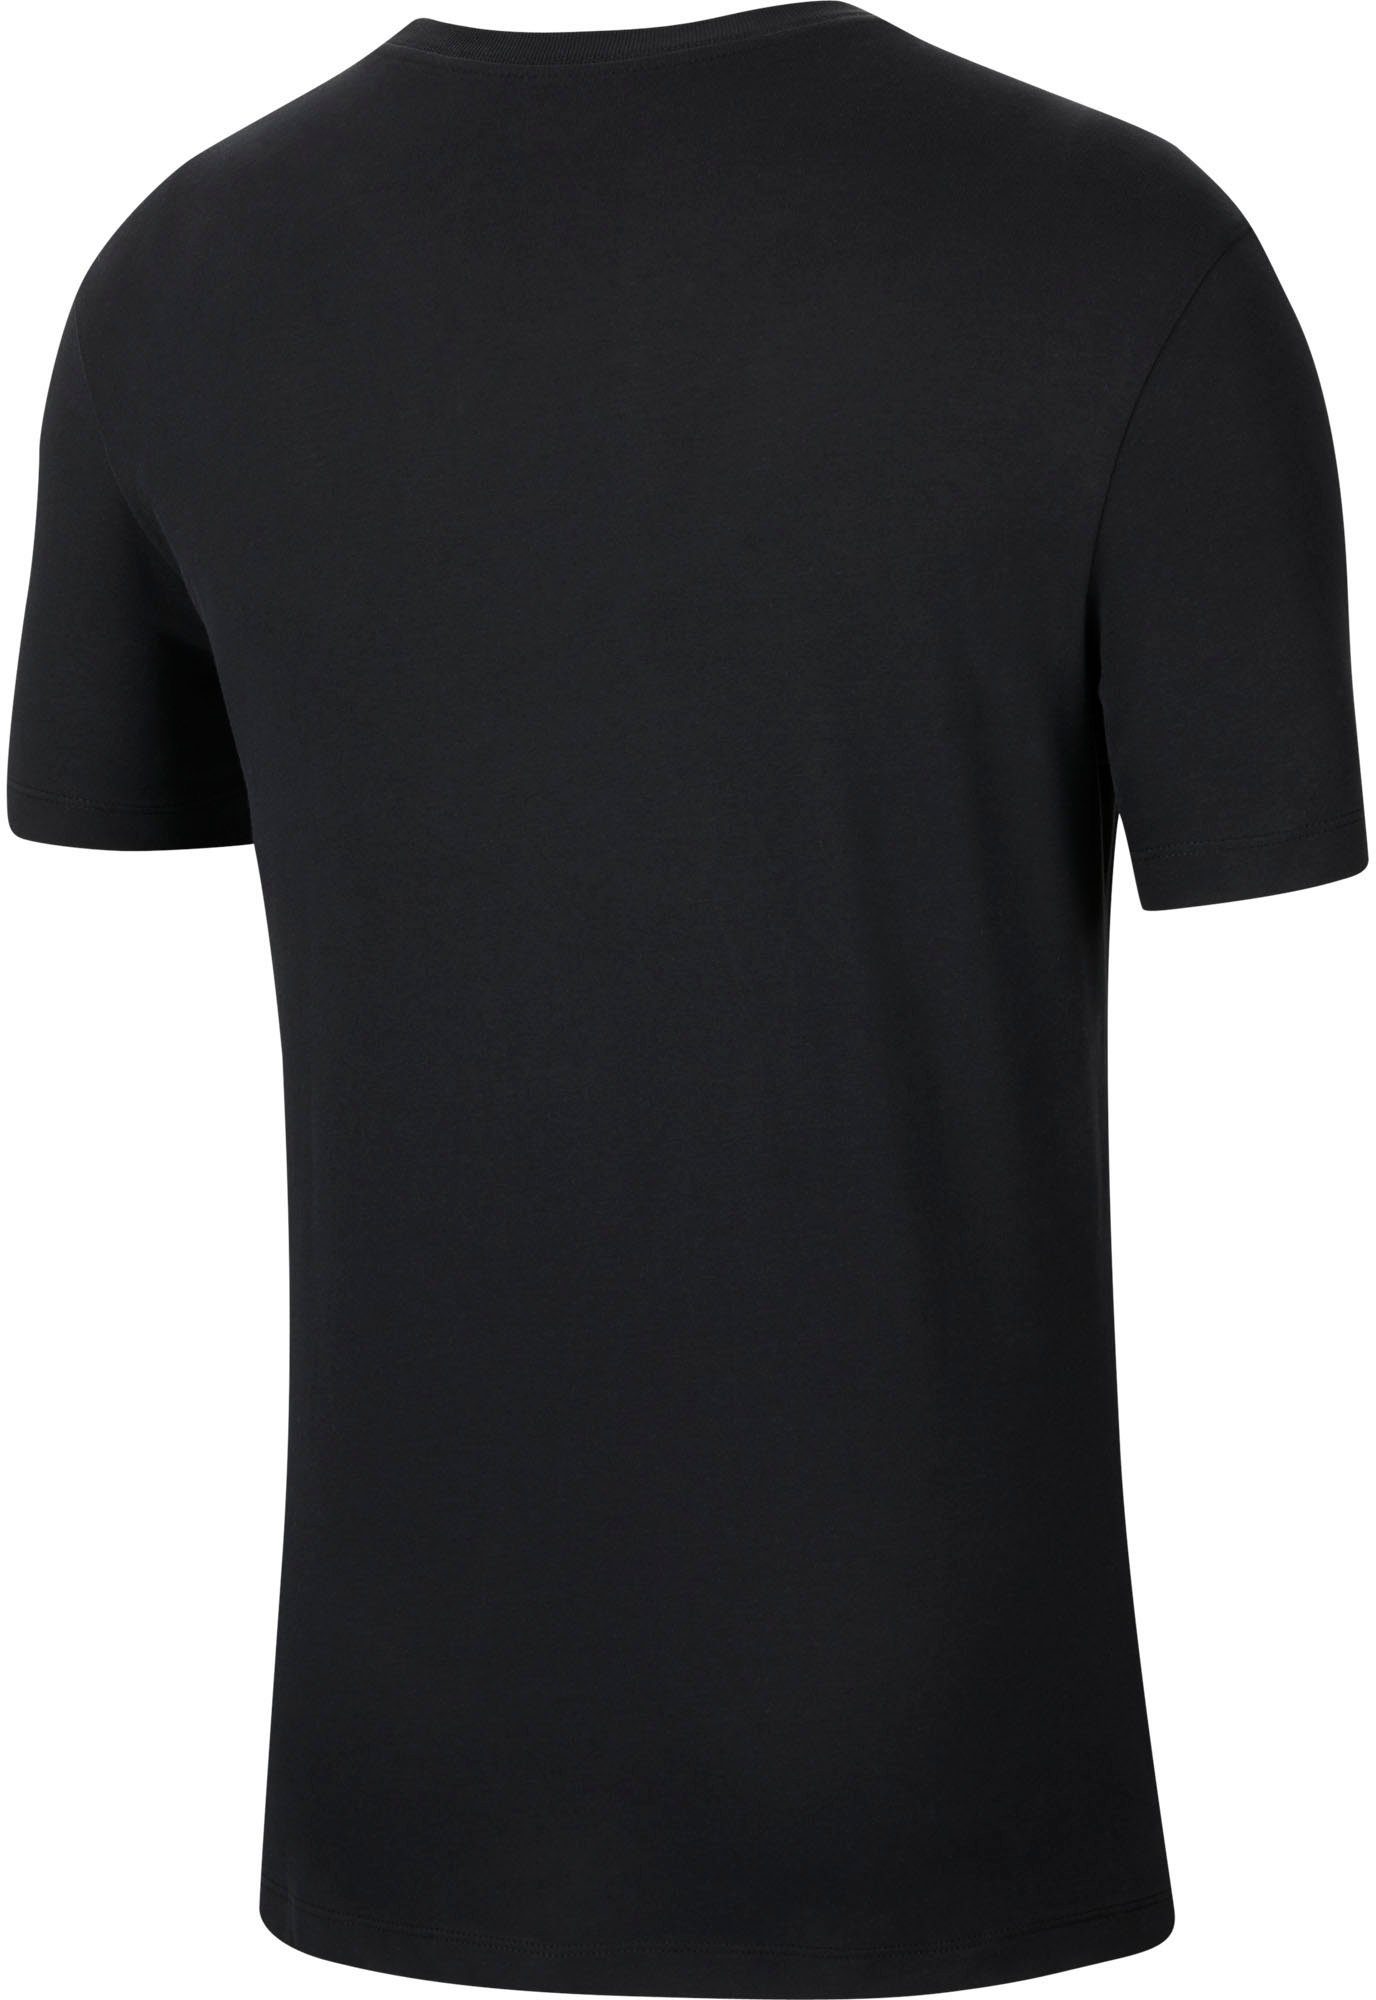 T-Shirt Swoosh schwarz Nike Trainingsshirt Training Men's Dri-FIT